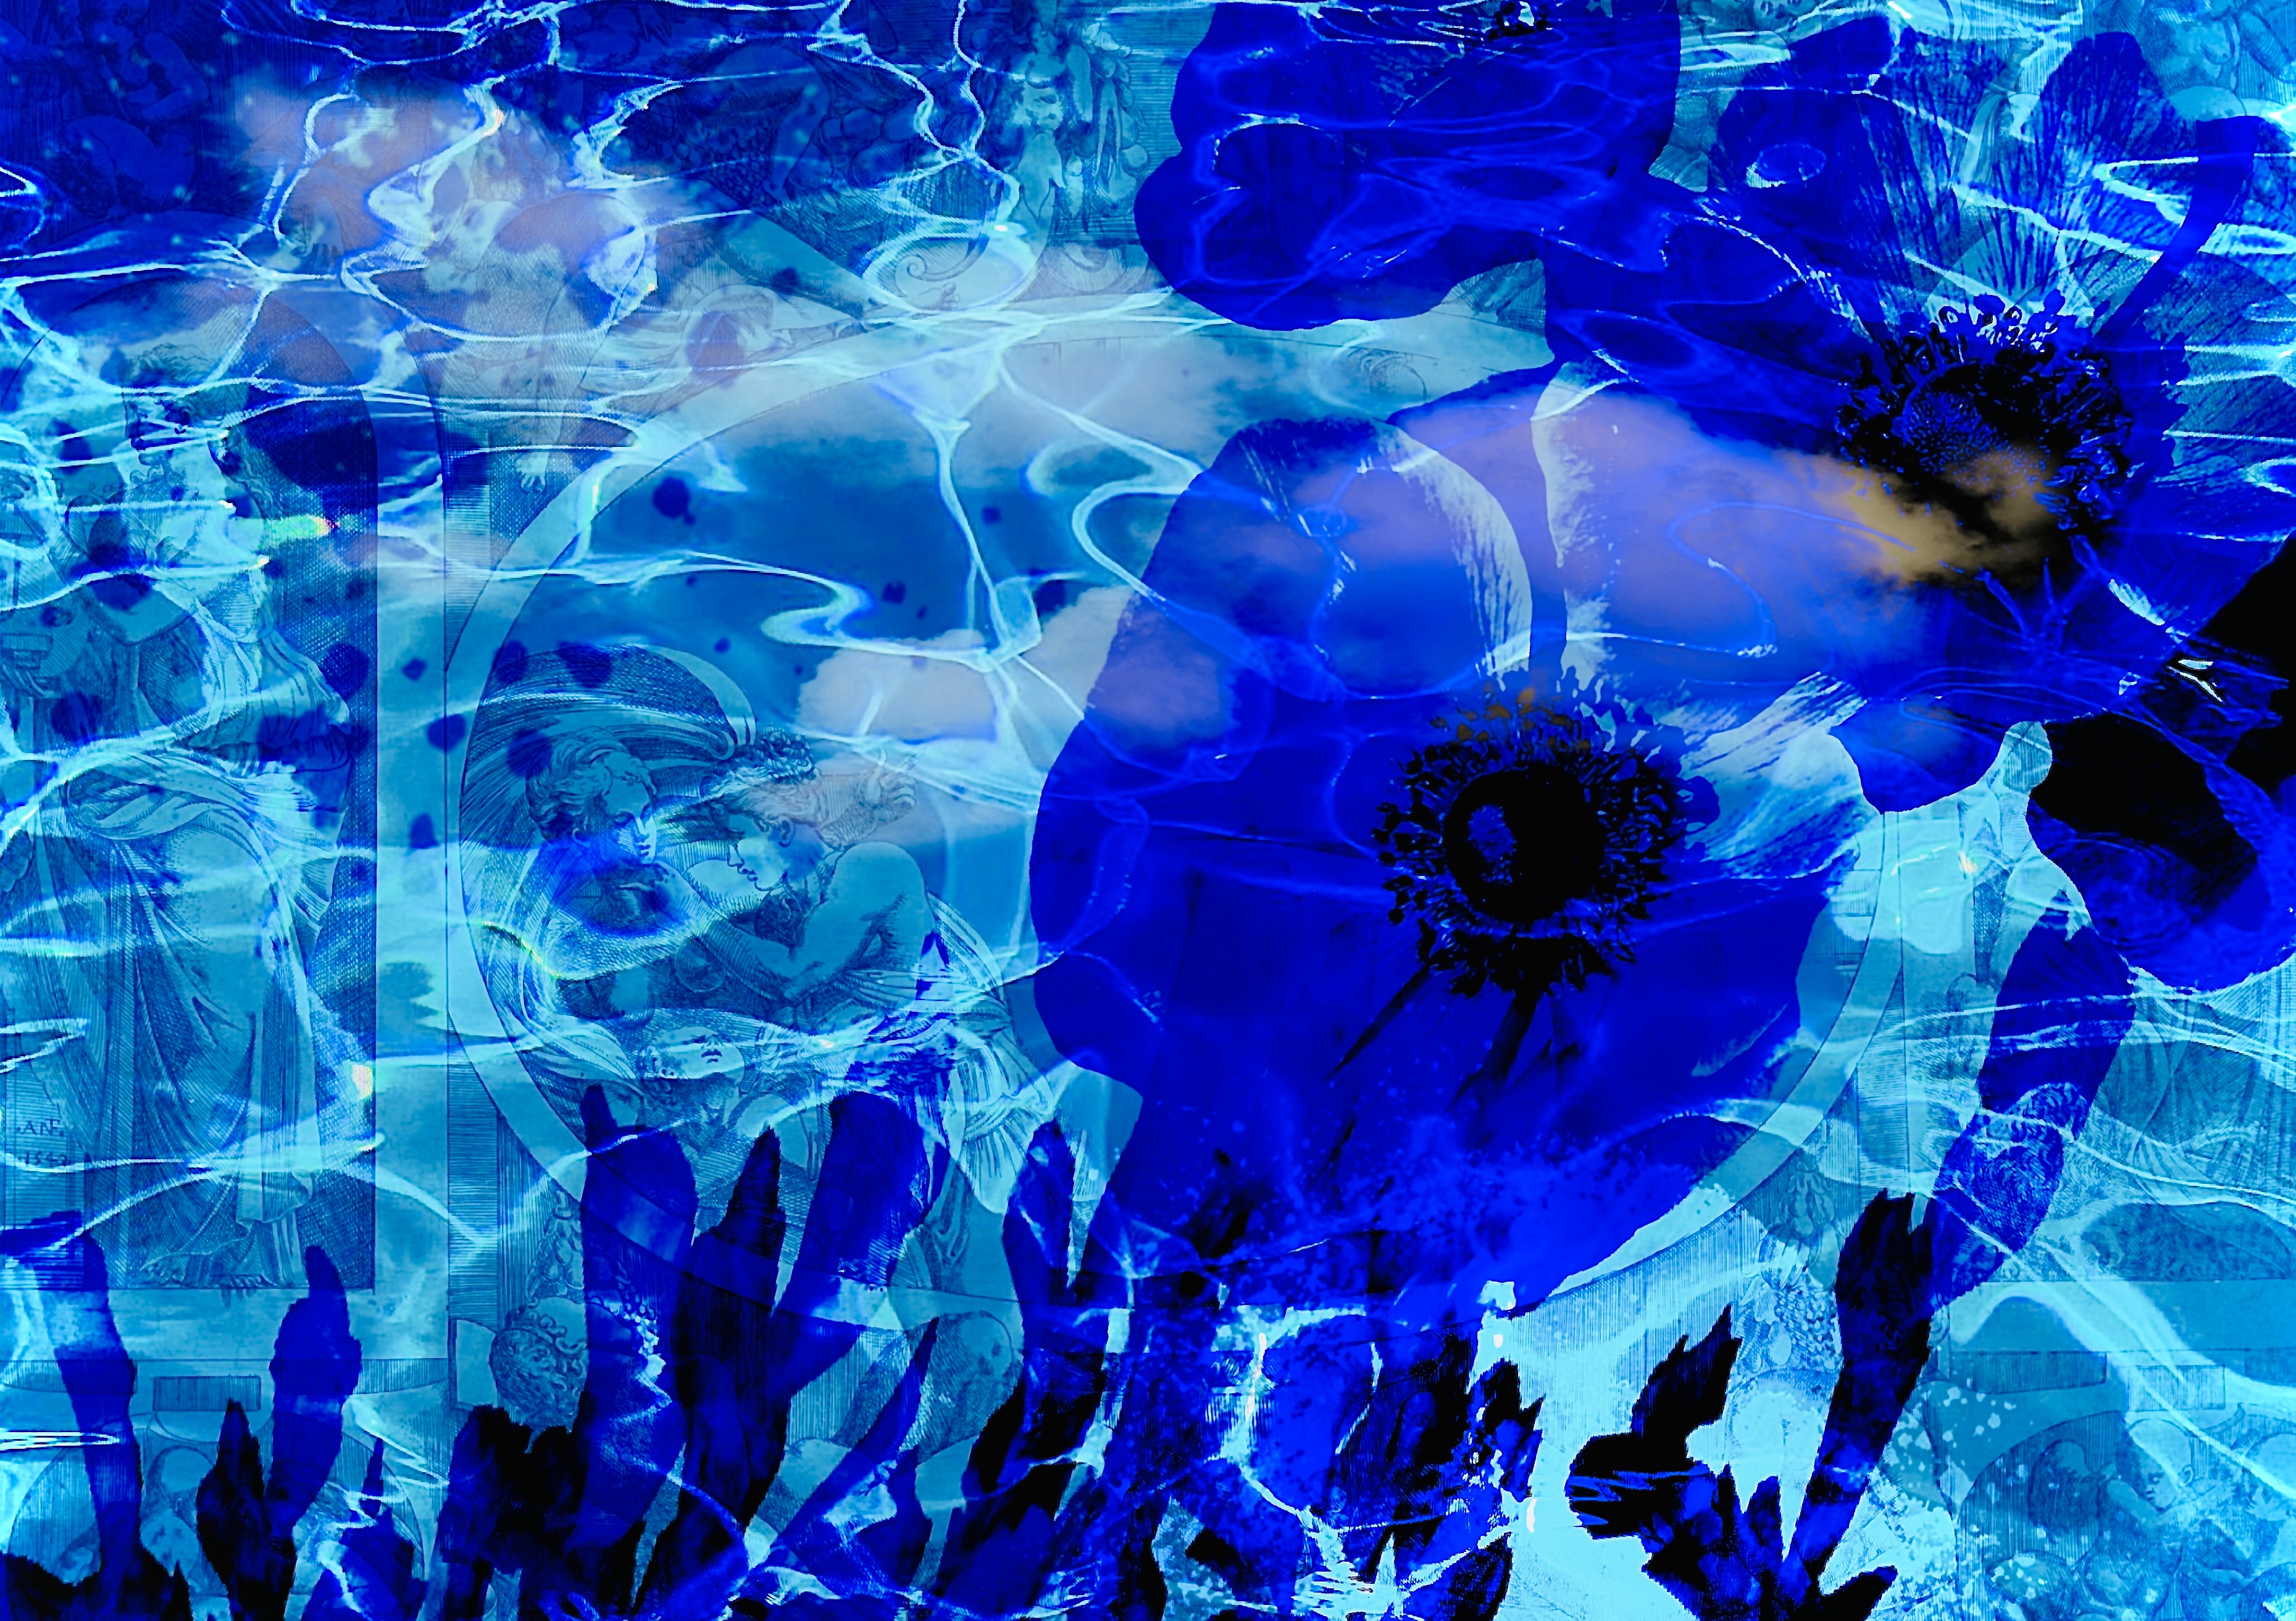 Trance Utopia-Aphrodite Blue by Dubwoman AKA Giovanna Sun